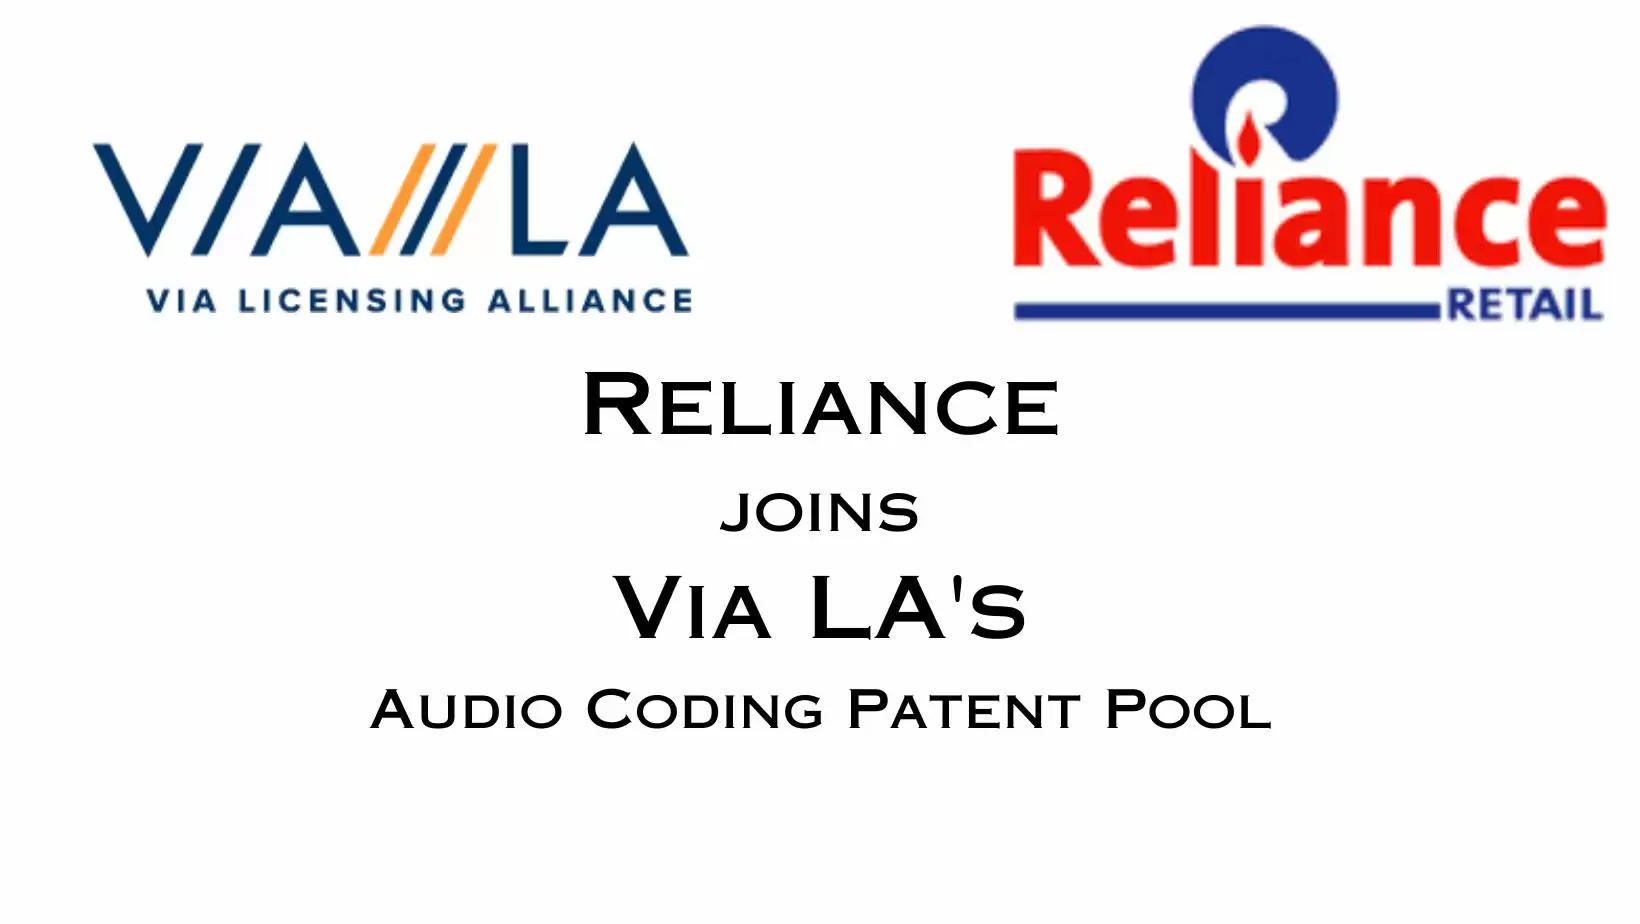 India’s Largest Retailer Reliance Joins Industry’s Leading Audio Codec Via LA’s Advanced Audio Coding Patent Pool